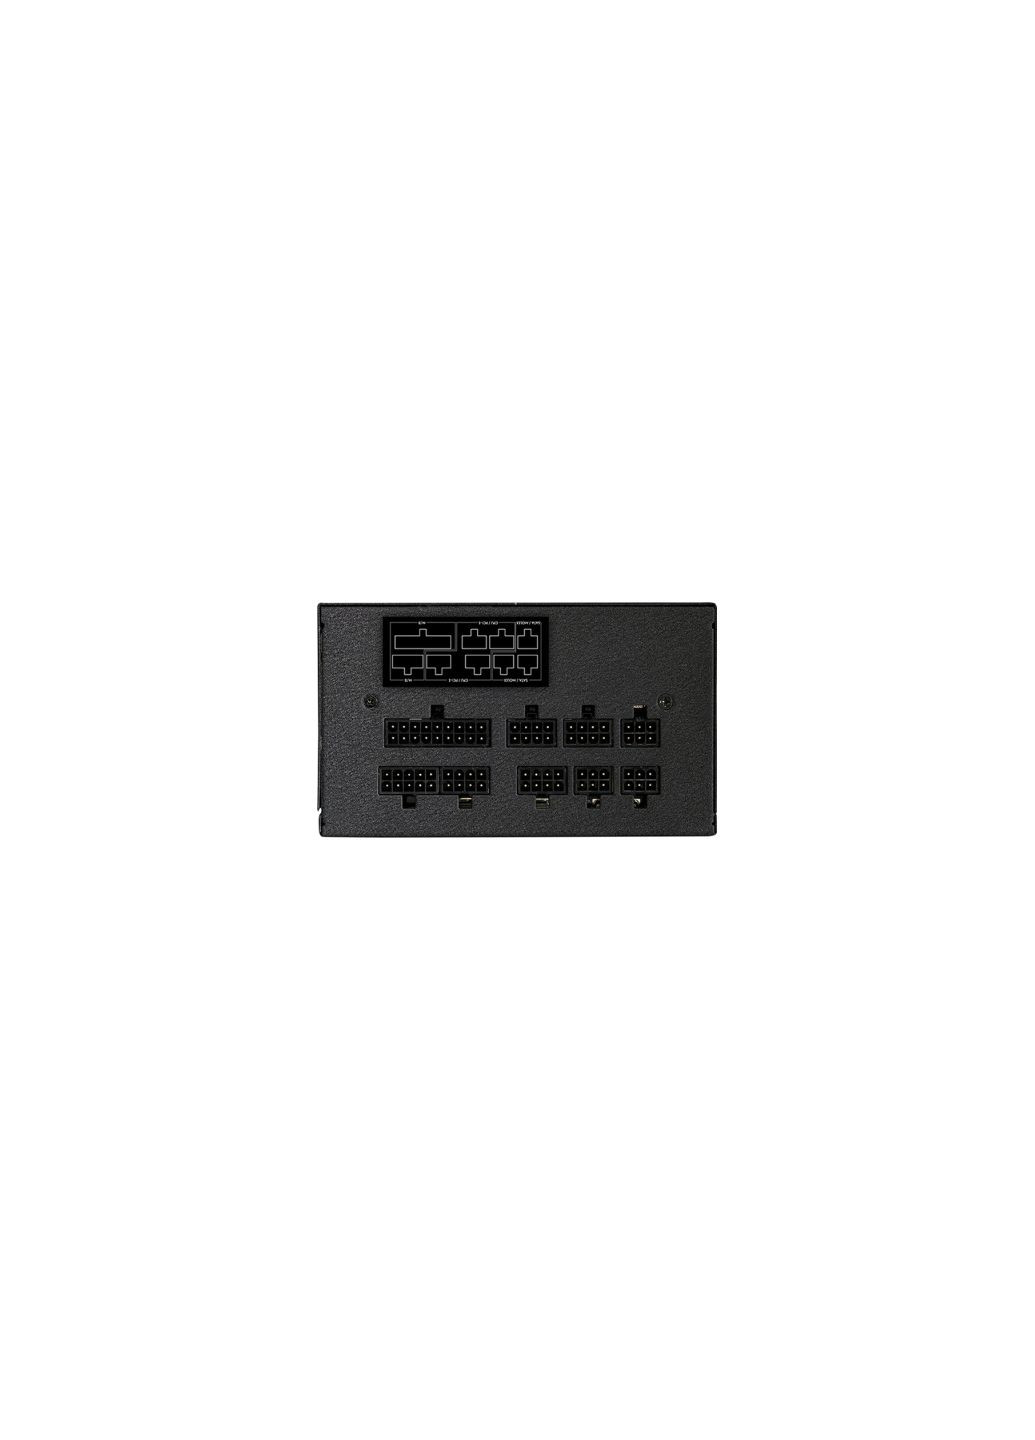 Блок питания (BDK550FC) Chieftec 550w steelpower (275080415)